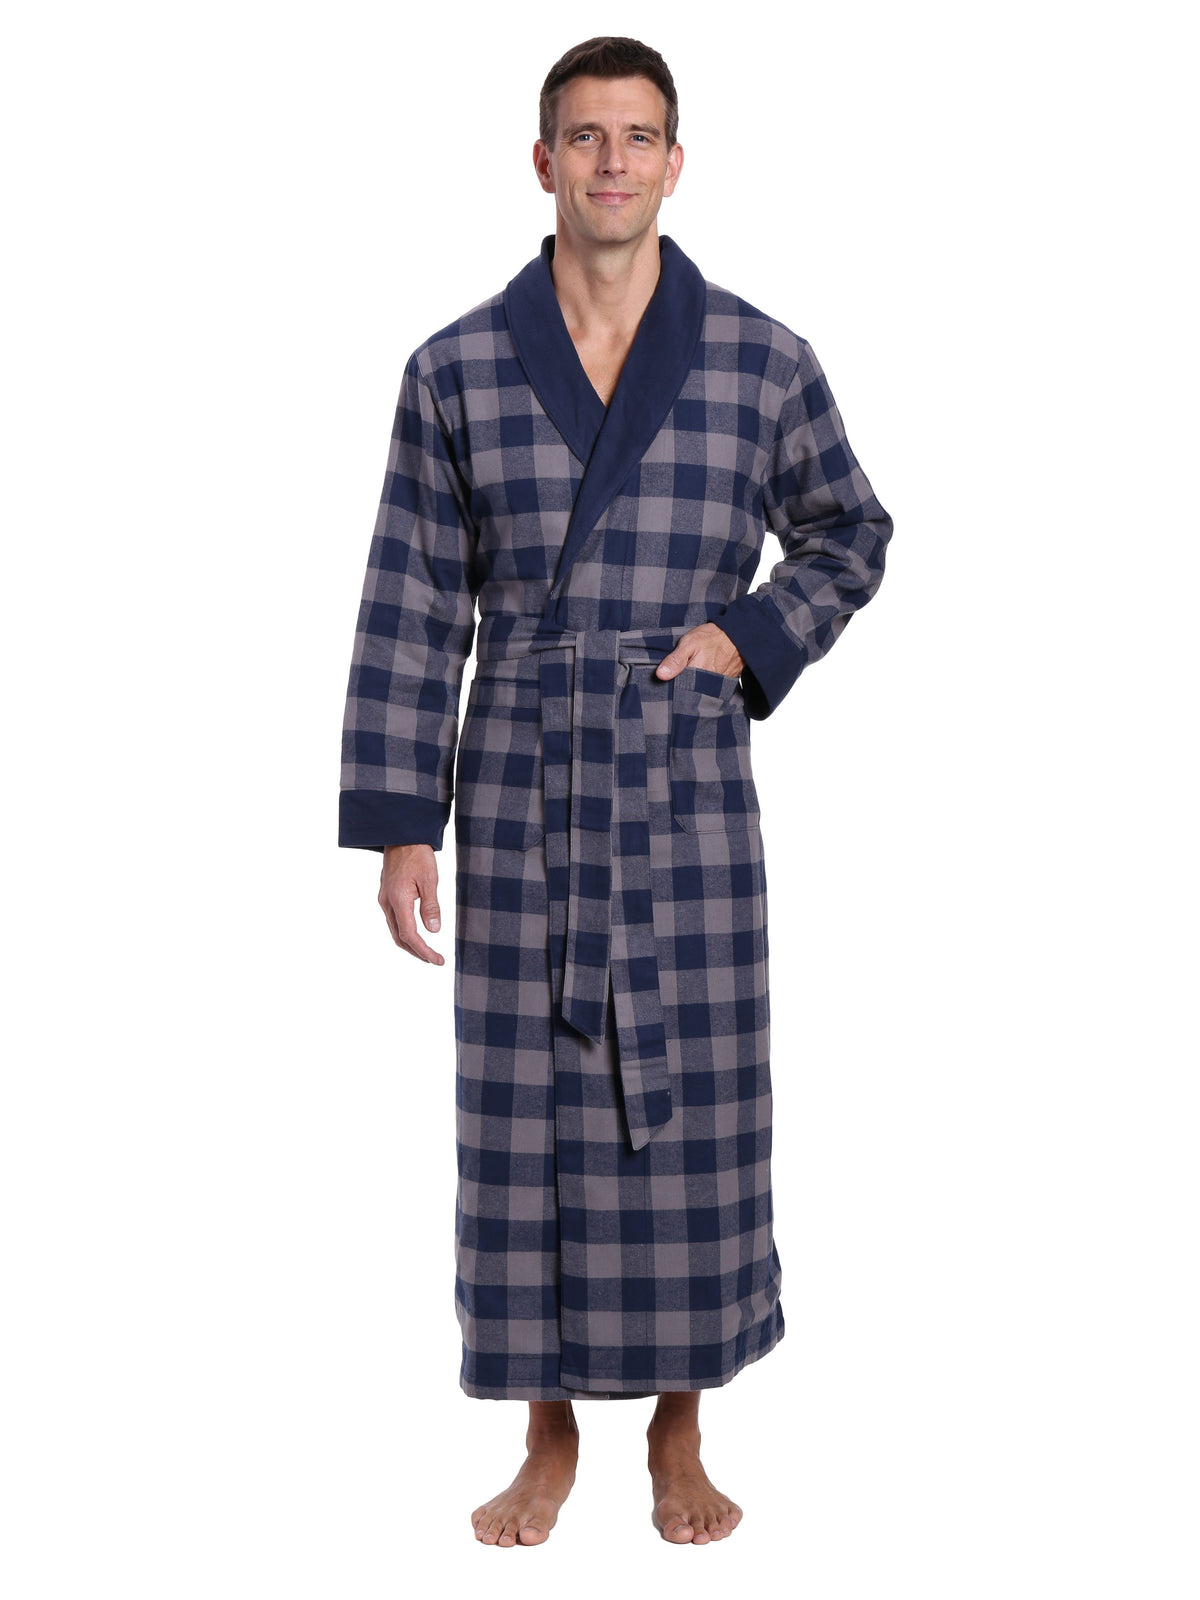 Men's Premium 100% Cotton Flannel Fleece Lined Robe - Gingham Checks - Charcoal-Navy